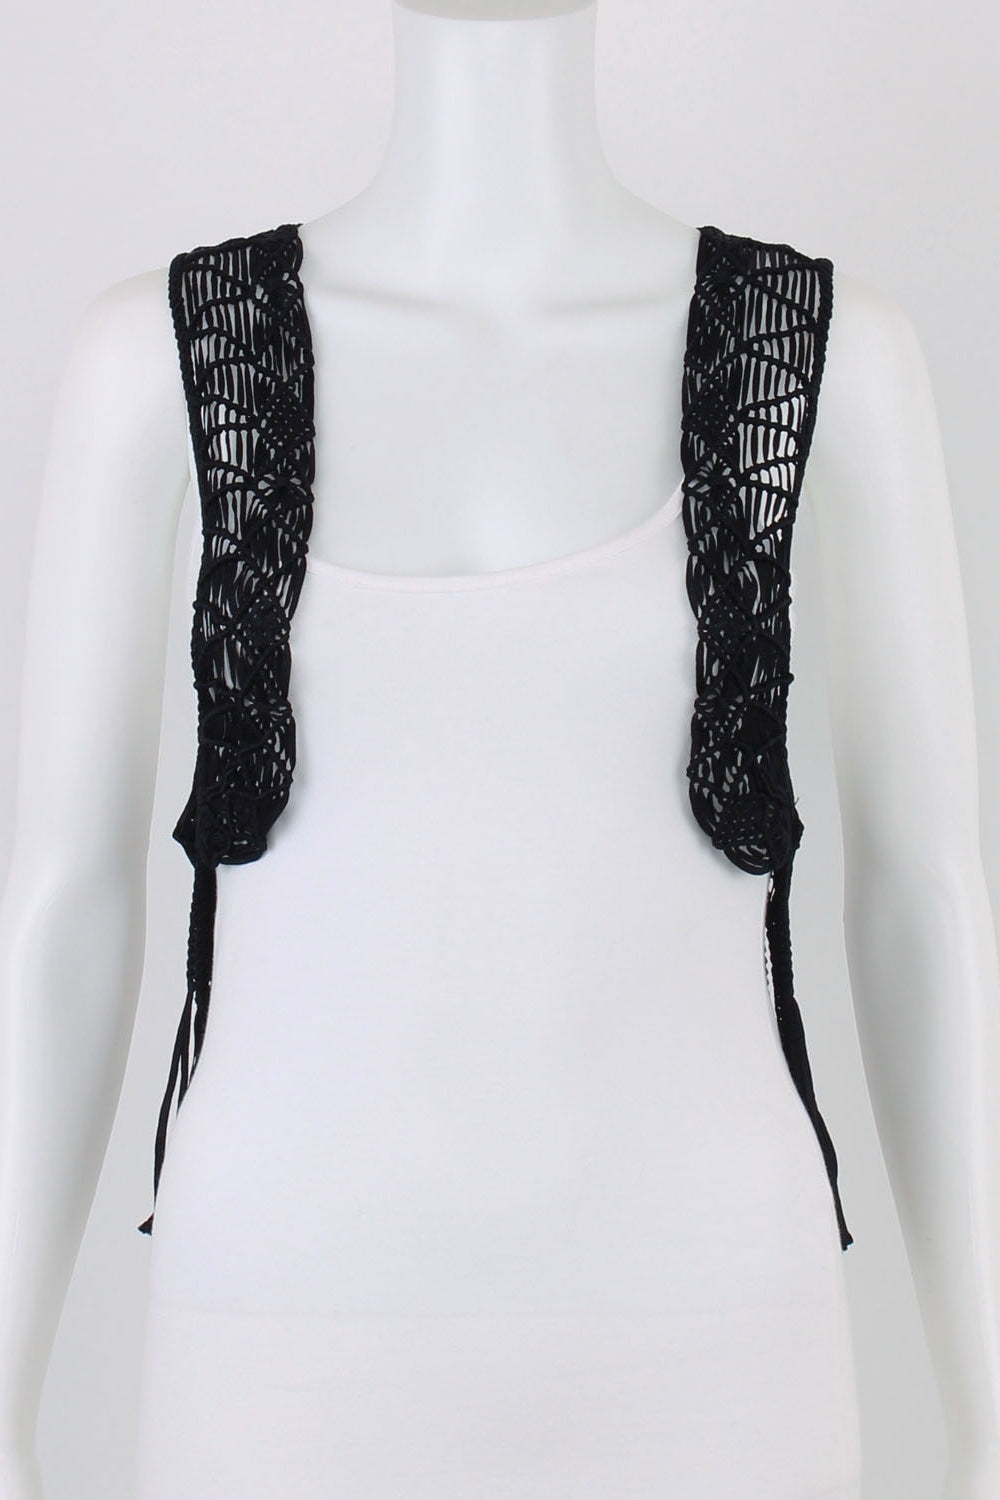 Sportsgirl Black Open Front Crochet Vest XS